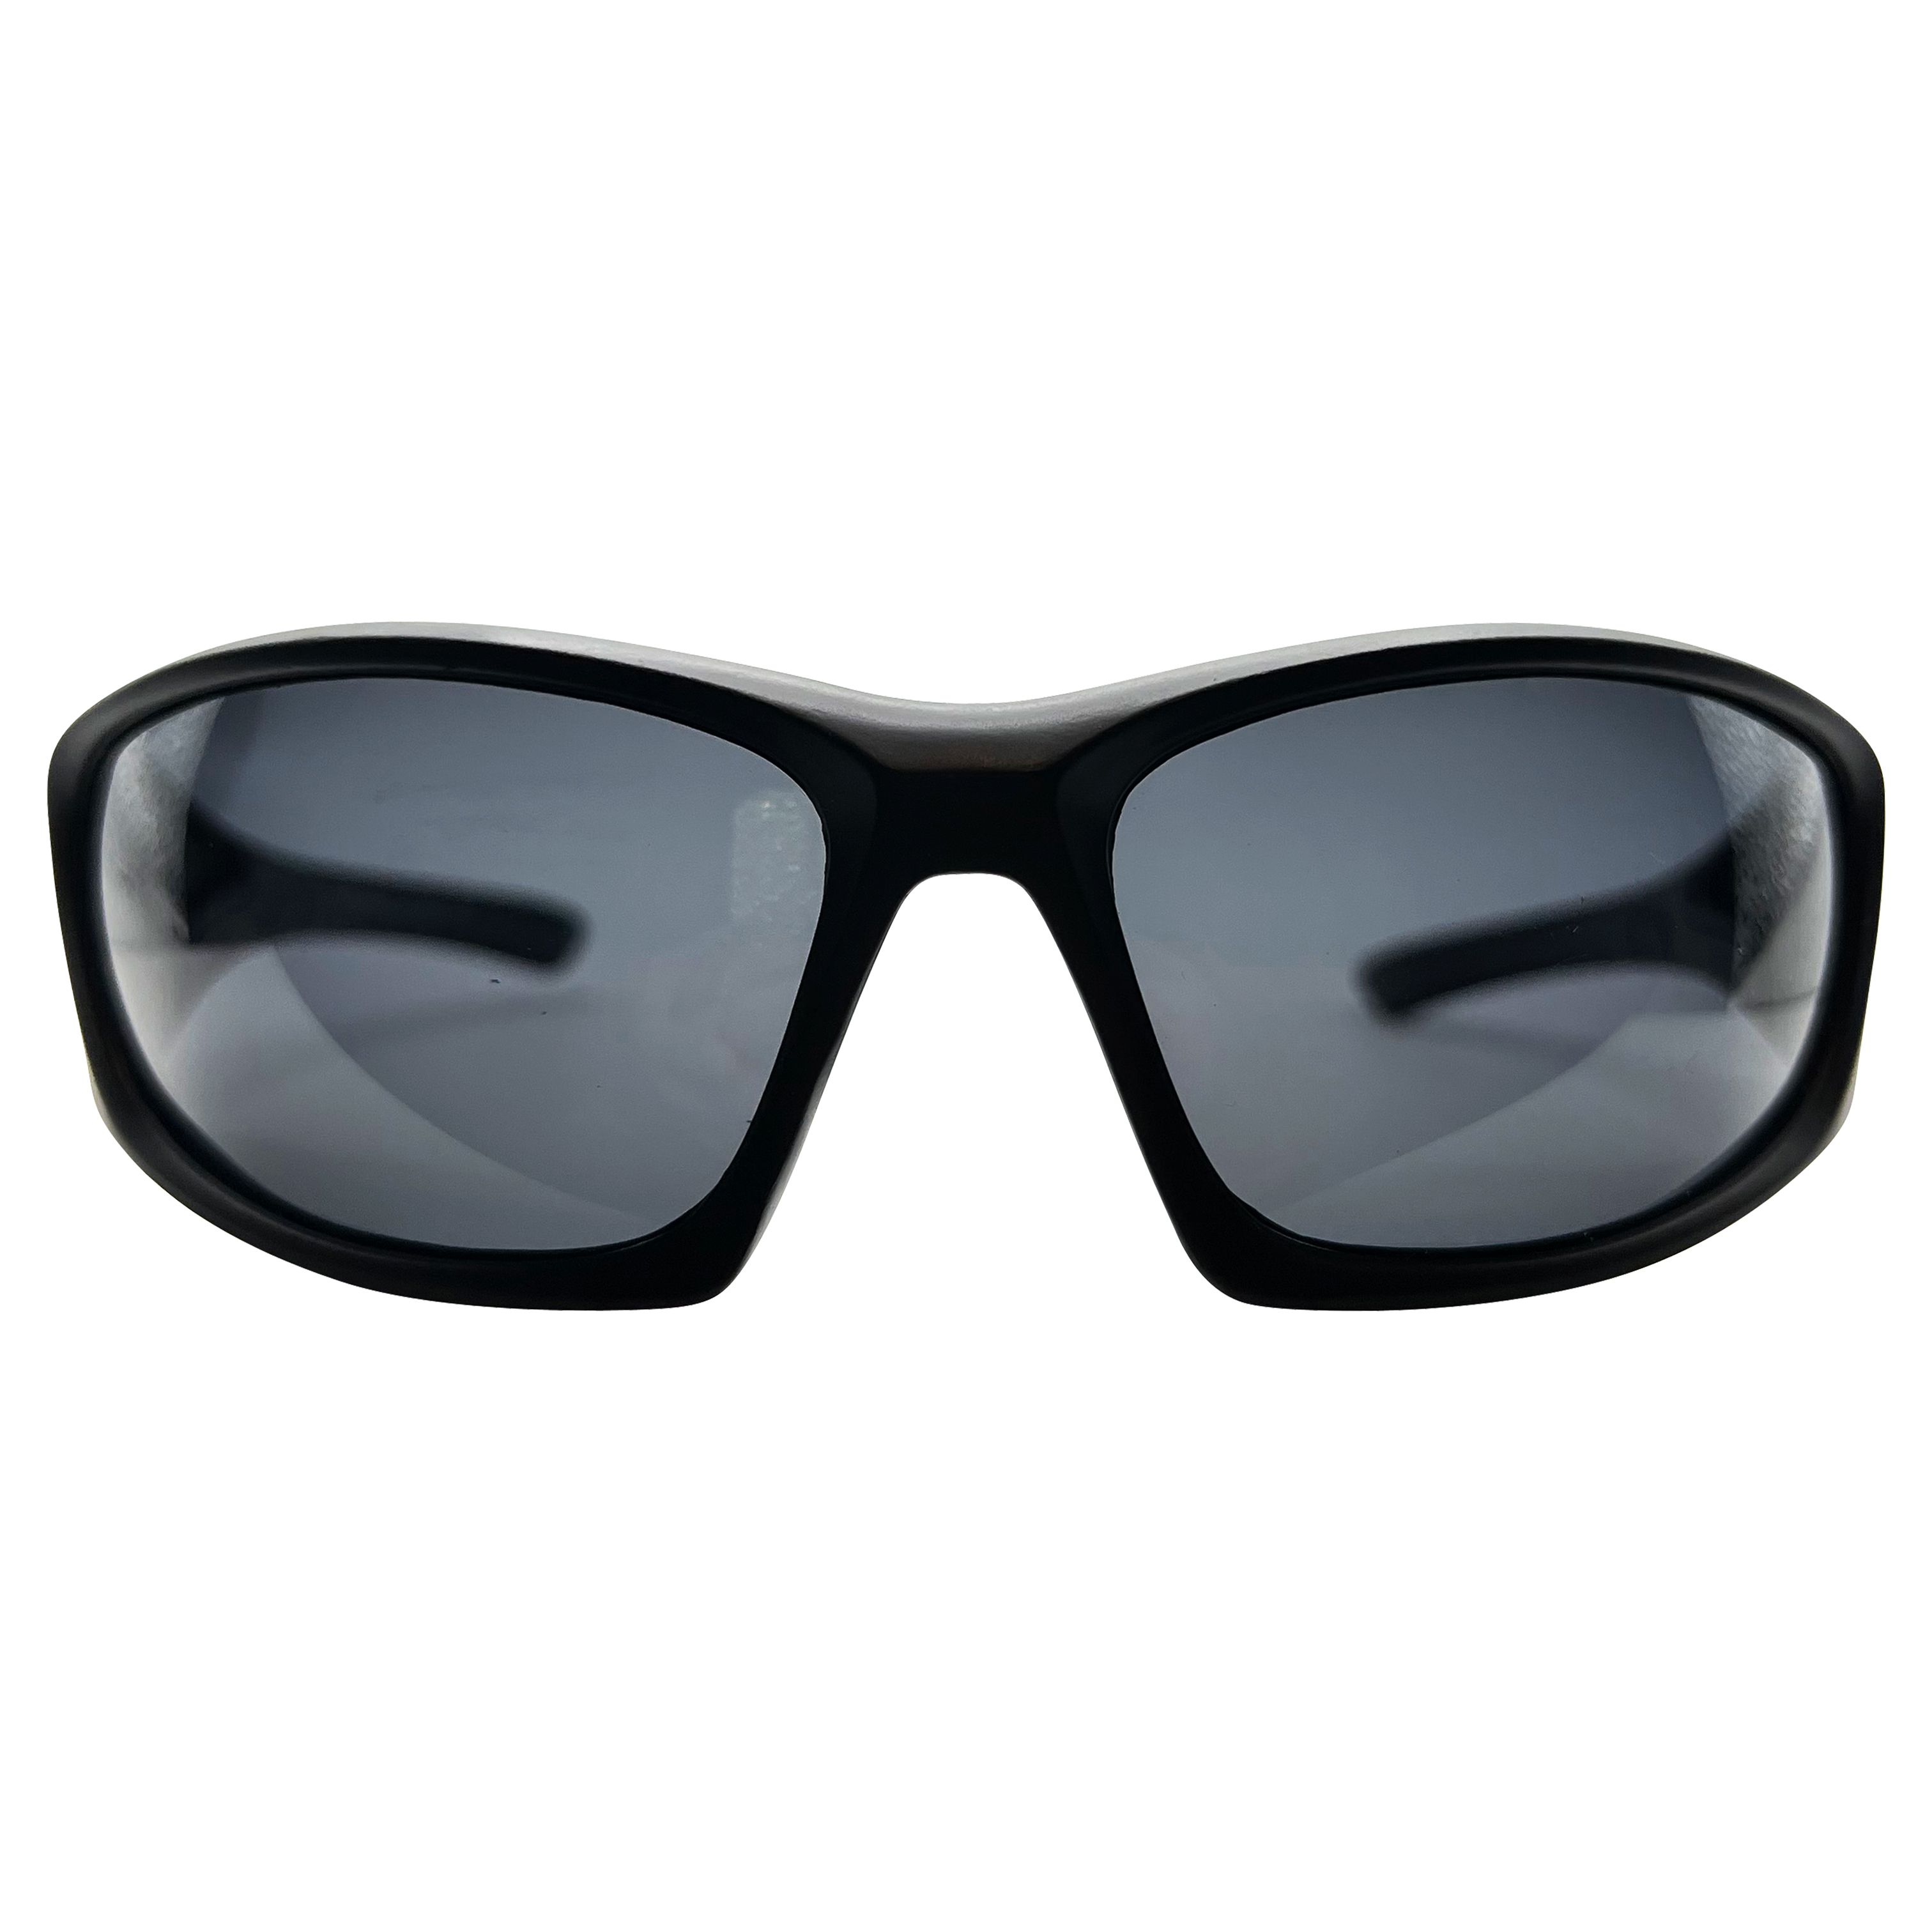 KARMA Super Dark/Black Sports Sunglasses